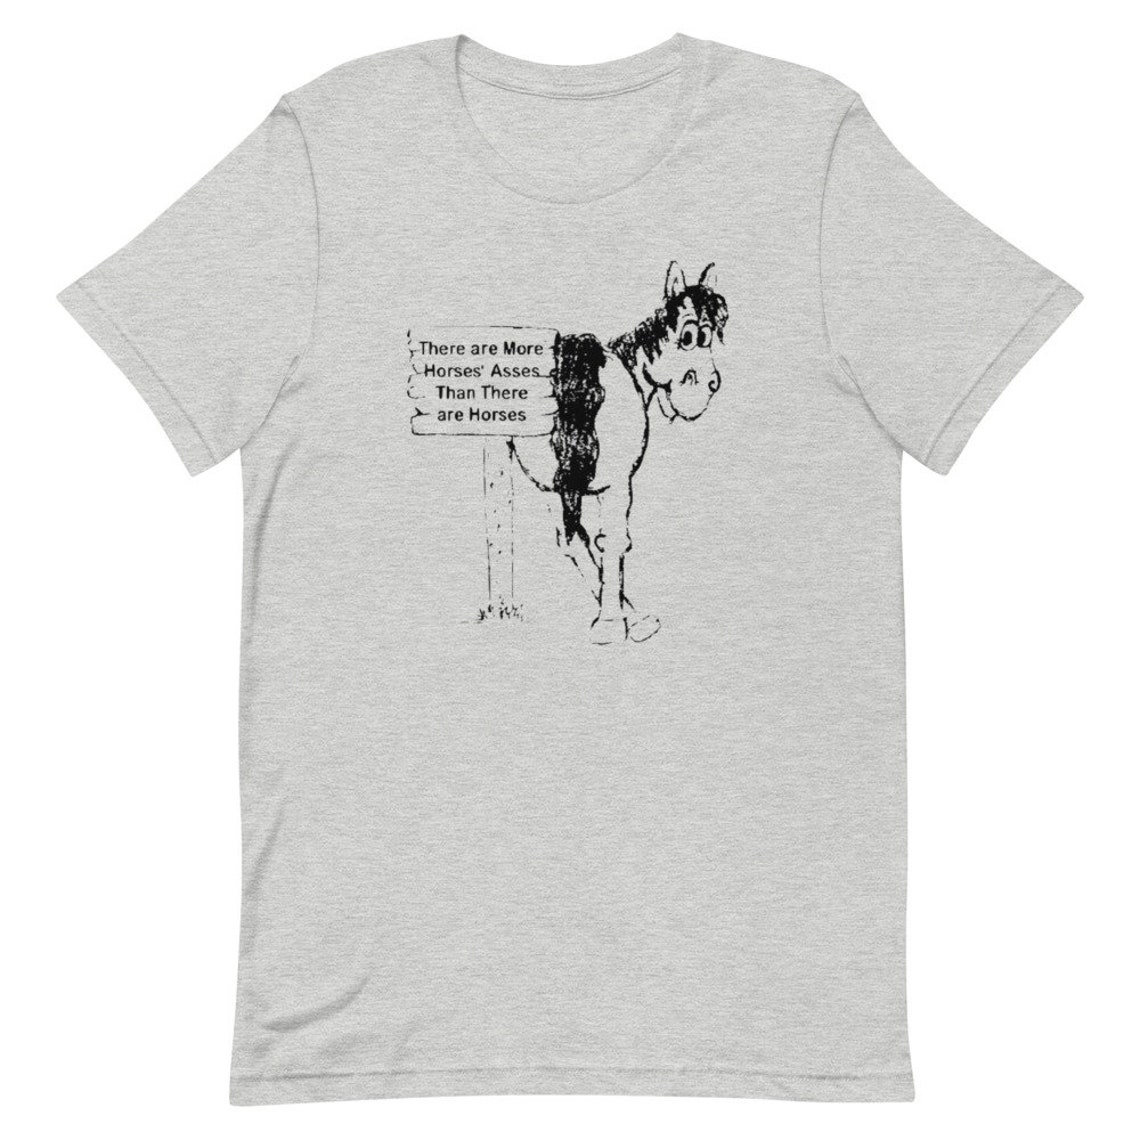 Horses' Ass T-Shirt Funny Shirt for Men Funny Shirt for | Etsy